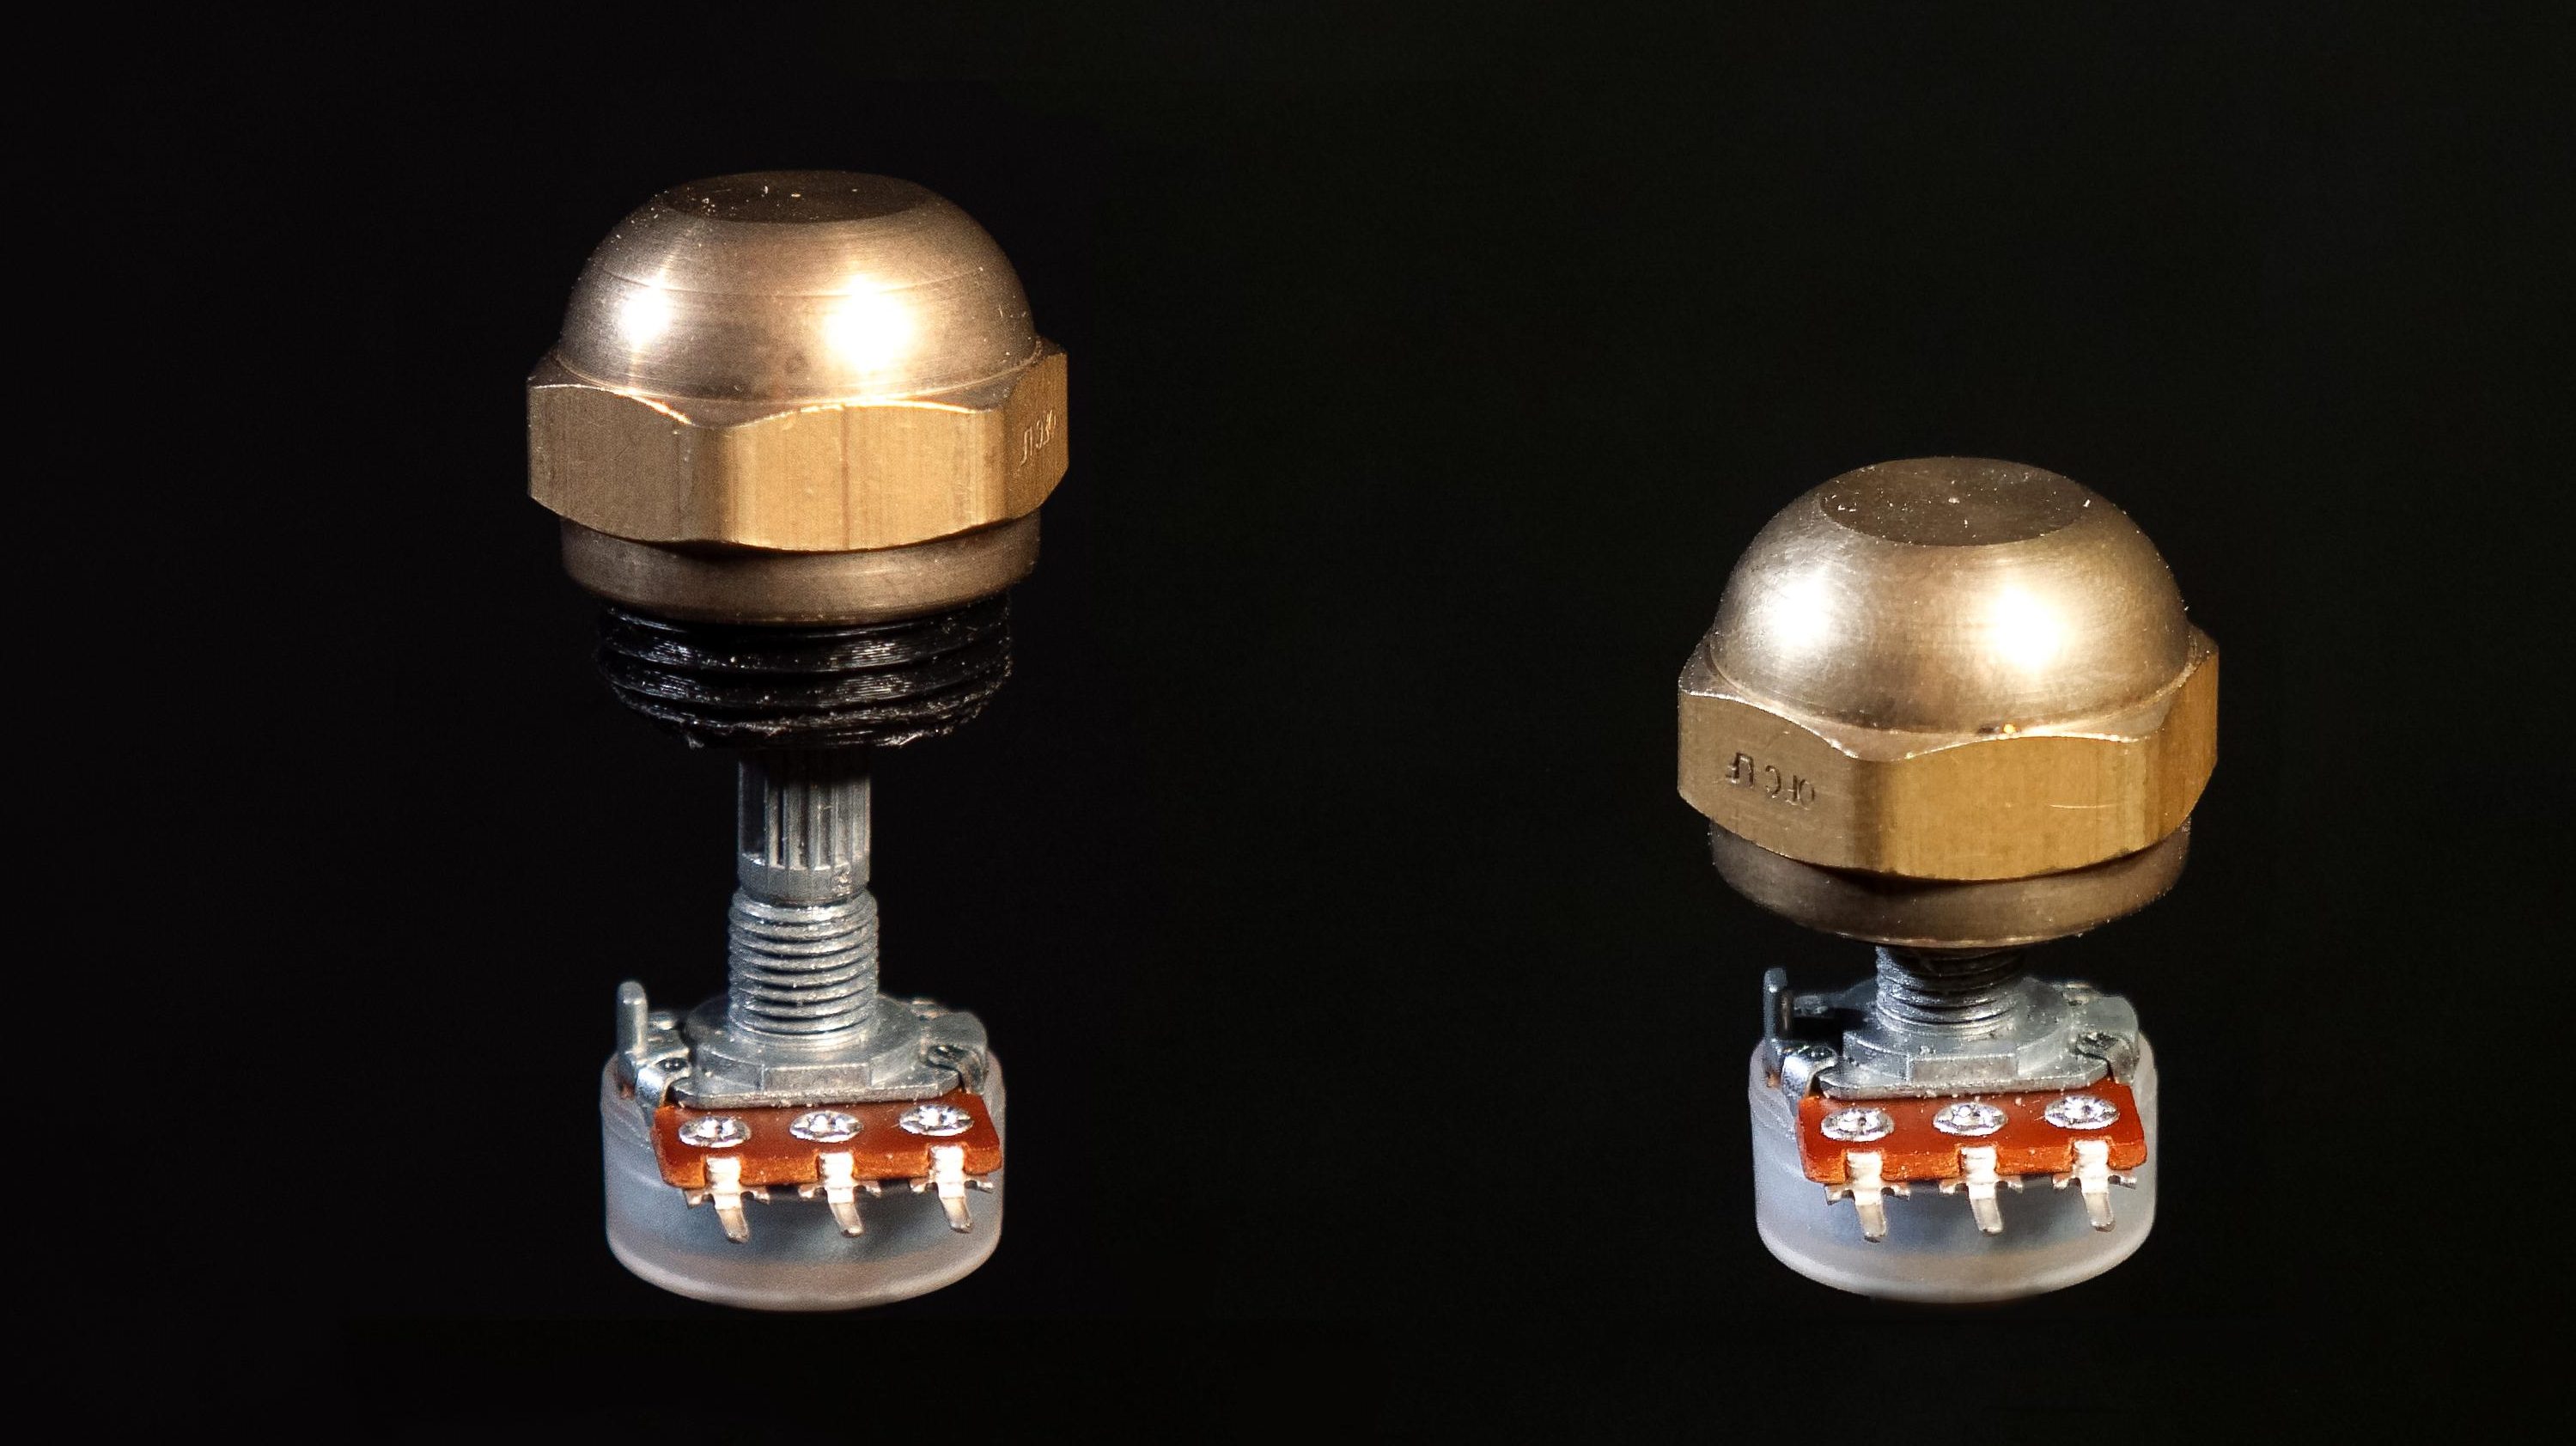 Brass Hardware Makes For Pretty Potentiometer Knobs